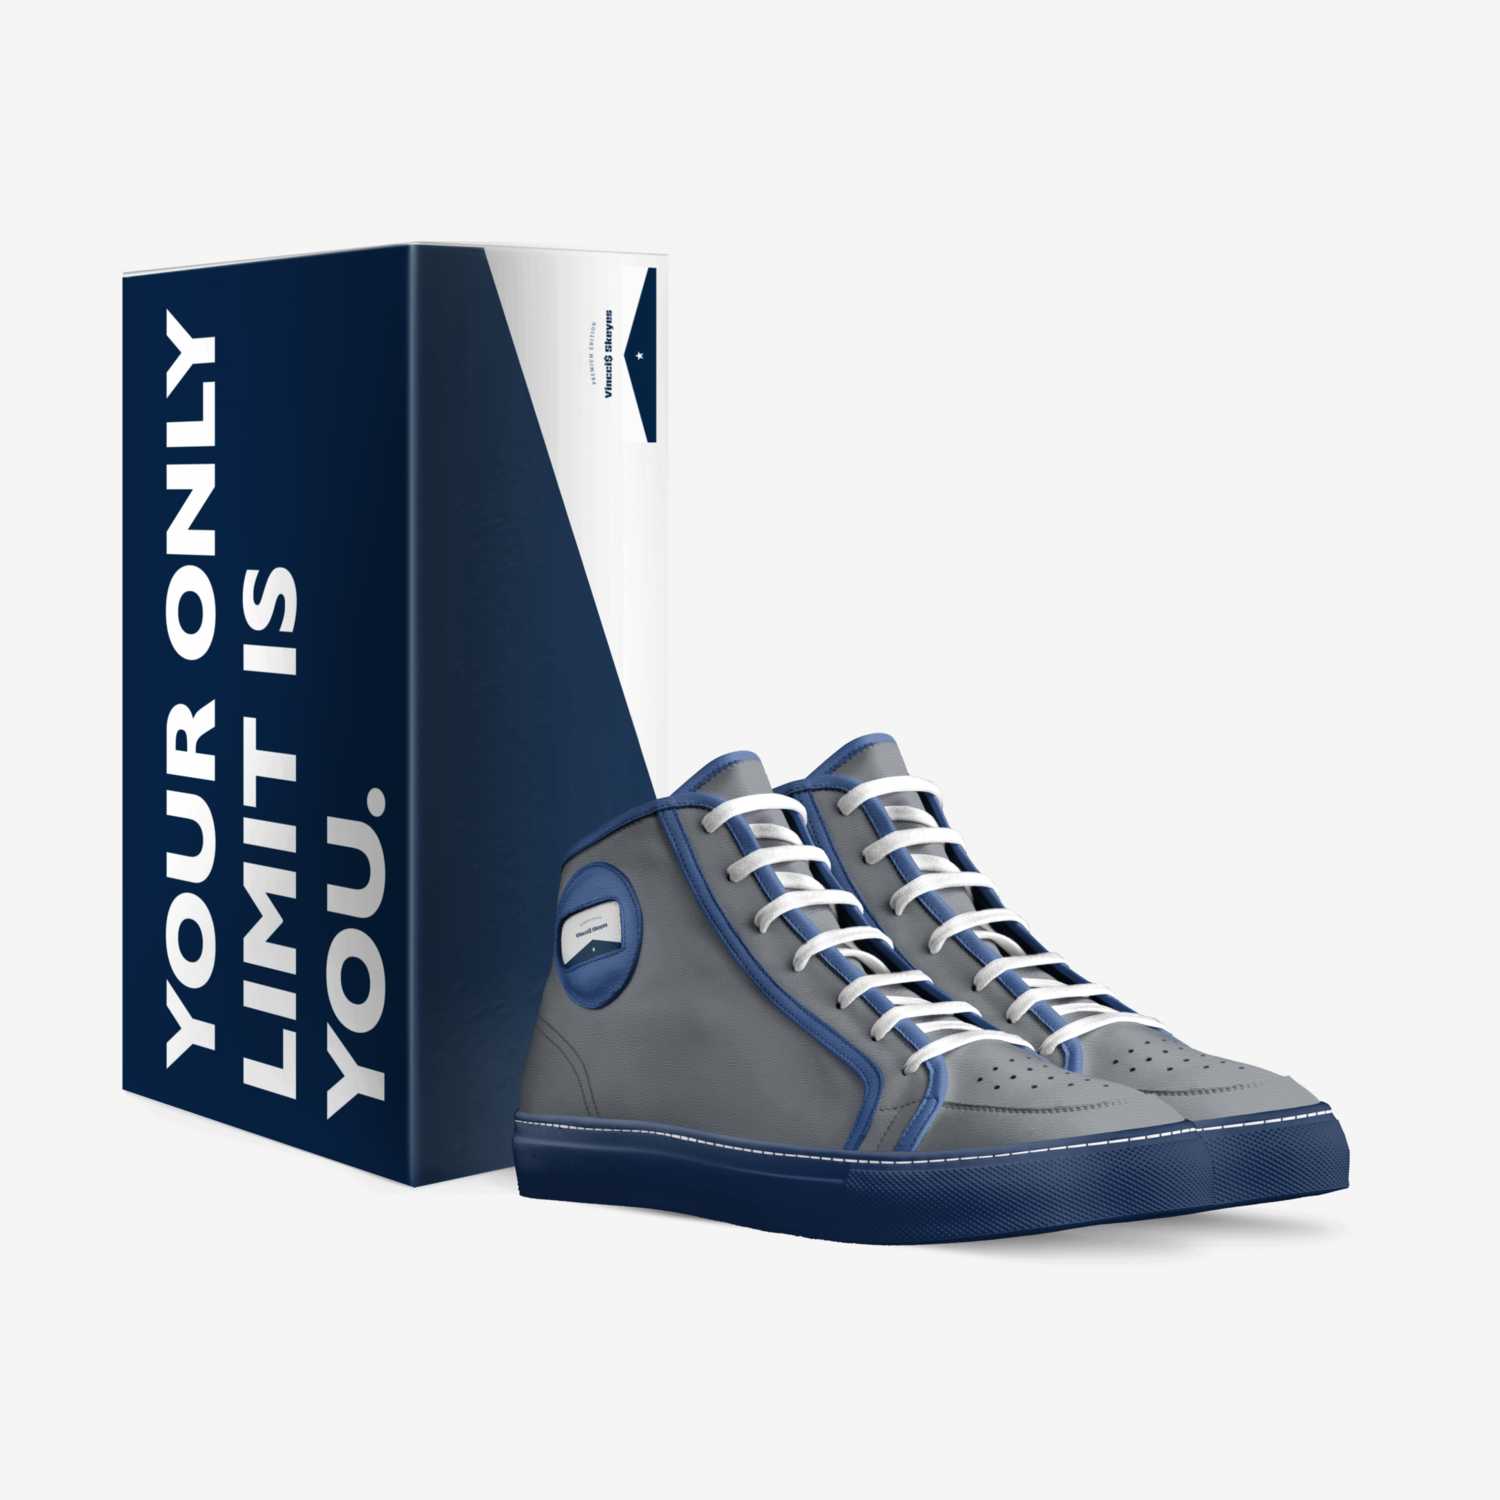 Vincci$ Skeyes custom made in Italy shoes by Leovincci | Box view